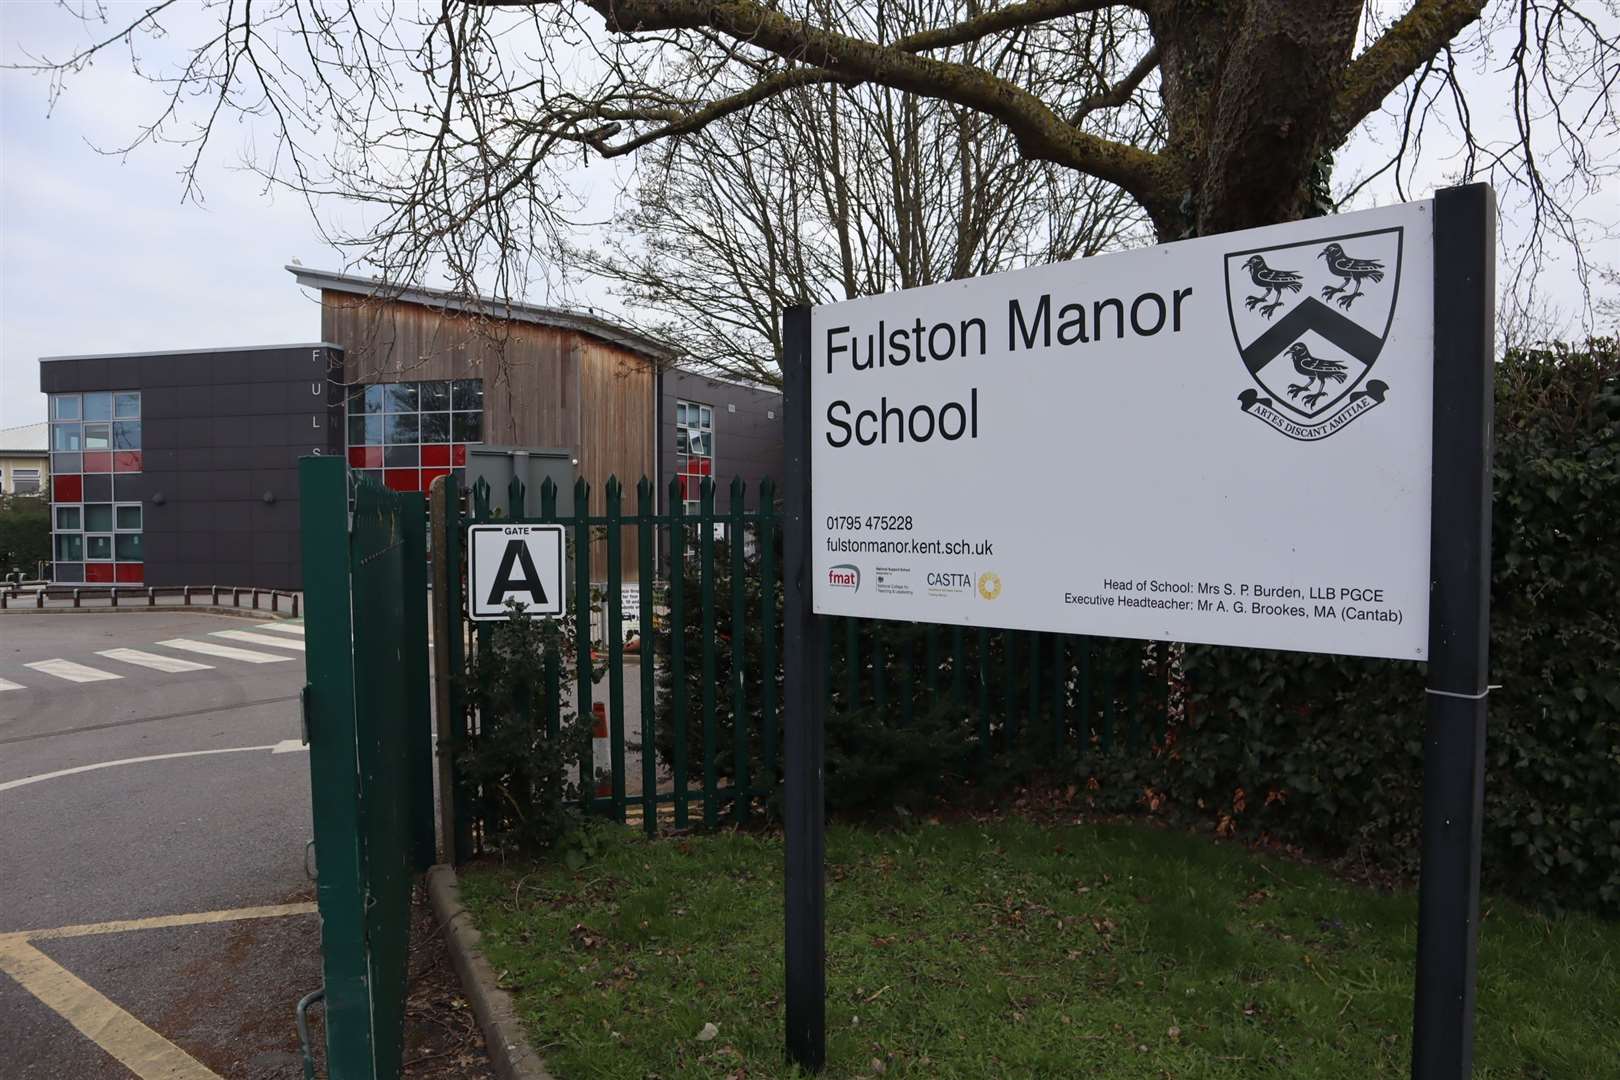 Fulston Manor School, Sittingbourne. Picture: John Nurden